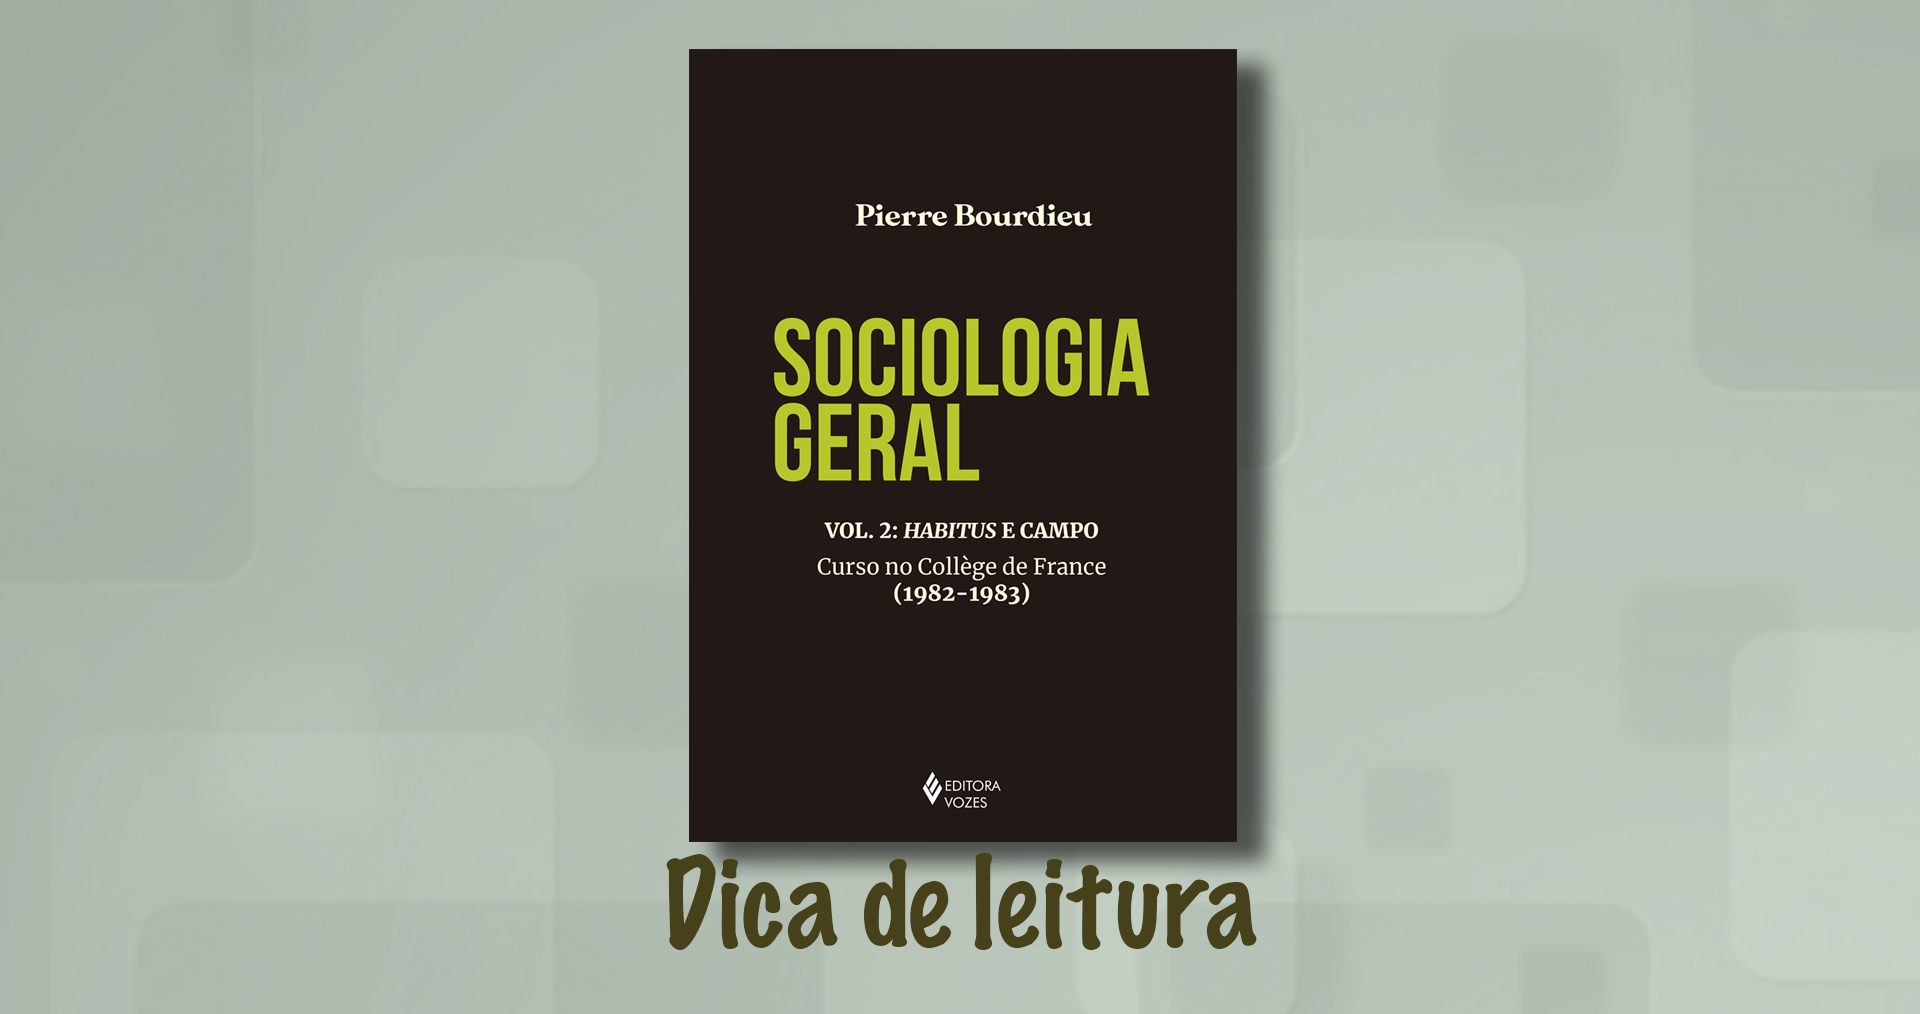 Sociologia geral vol. 2 - Pierre Bourdieu